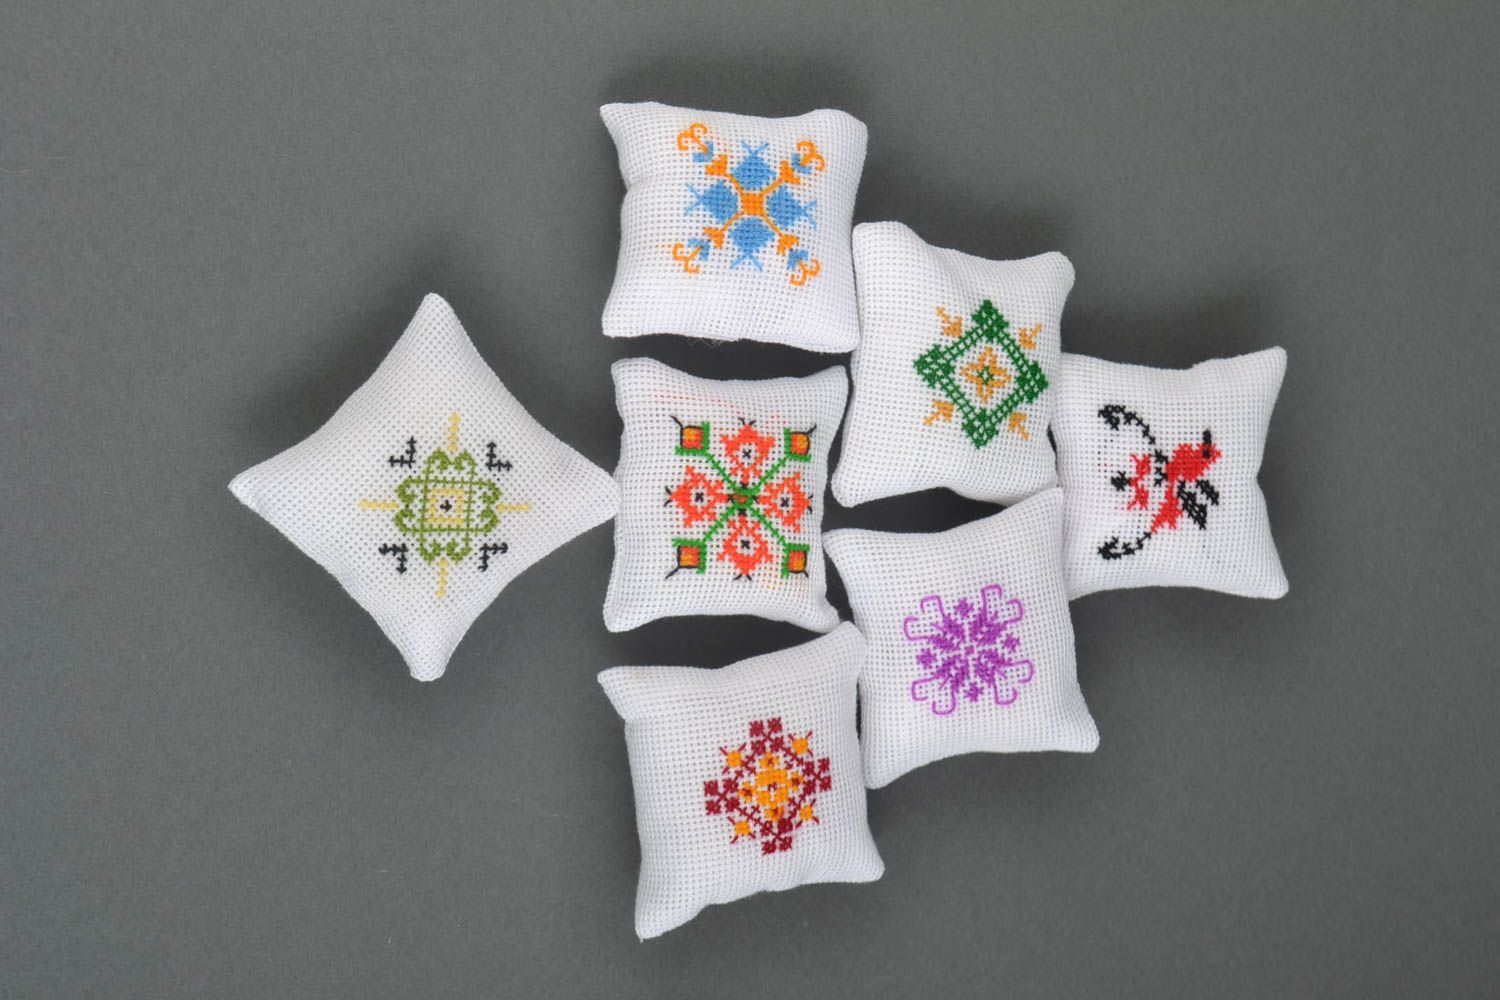 Handmade pincushions embroidery supplies 7 pin cushions needle holders gift idea photo 5